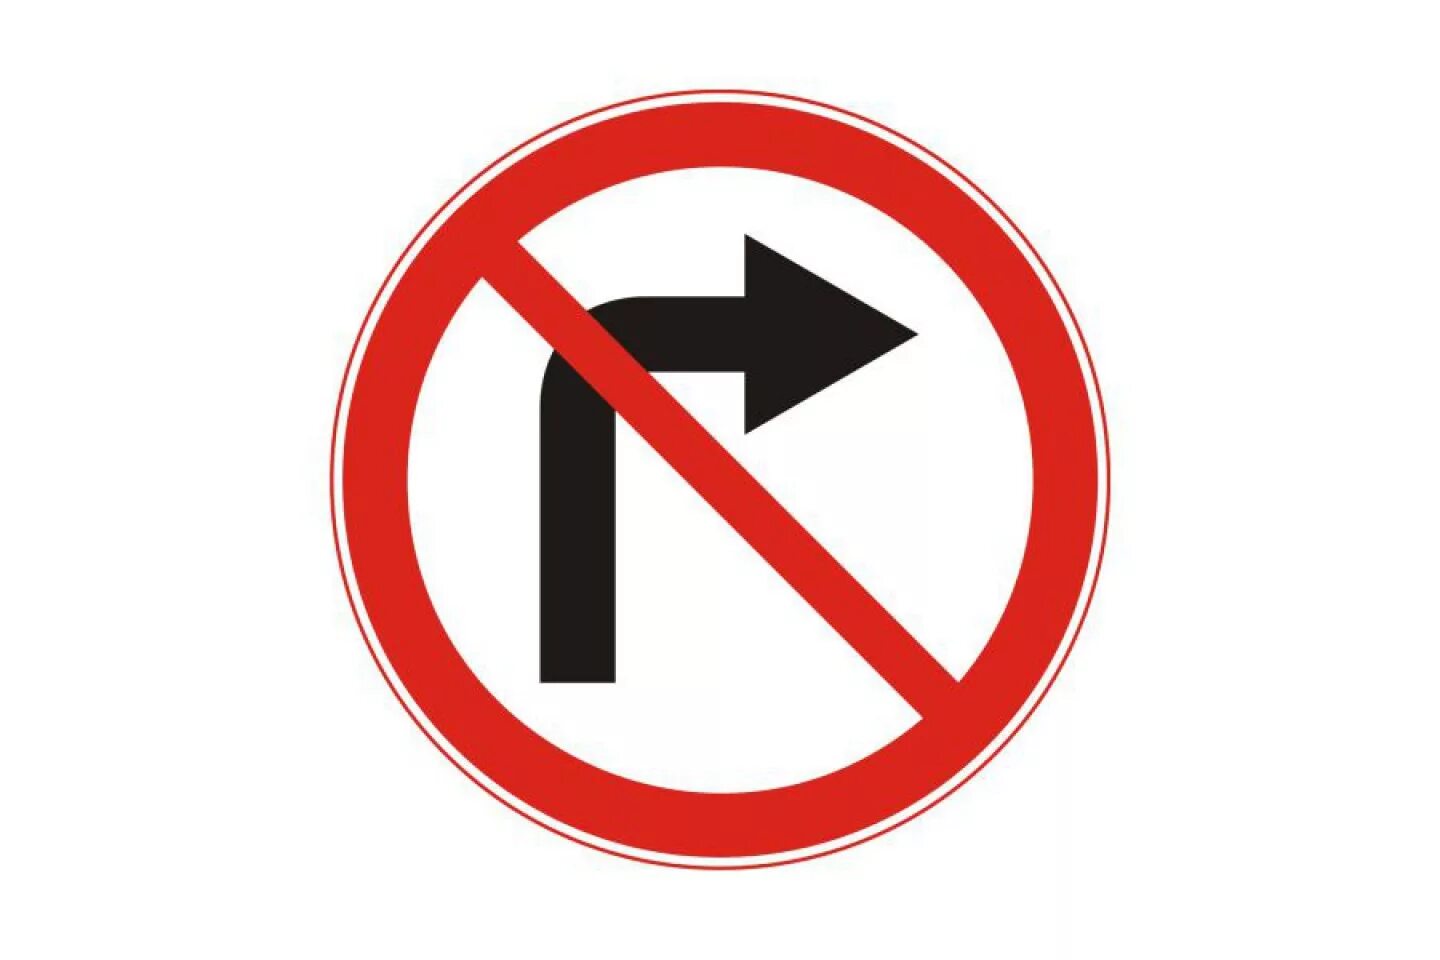 1 18 1 180. Поворот направо запрещен дорожный знак. 3.18.1 Поворот направо запрещен. Знак 3.18.1. Знак 3.18.2 поворот налево запрещен.